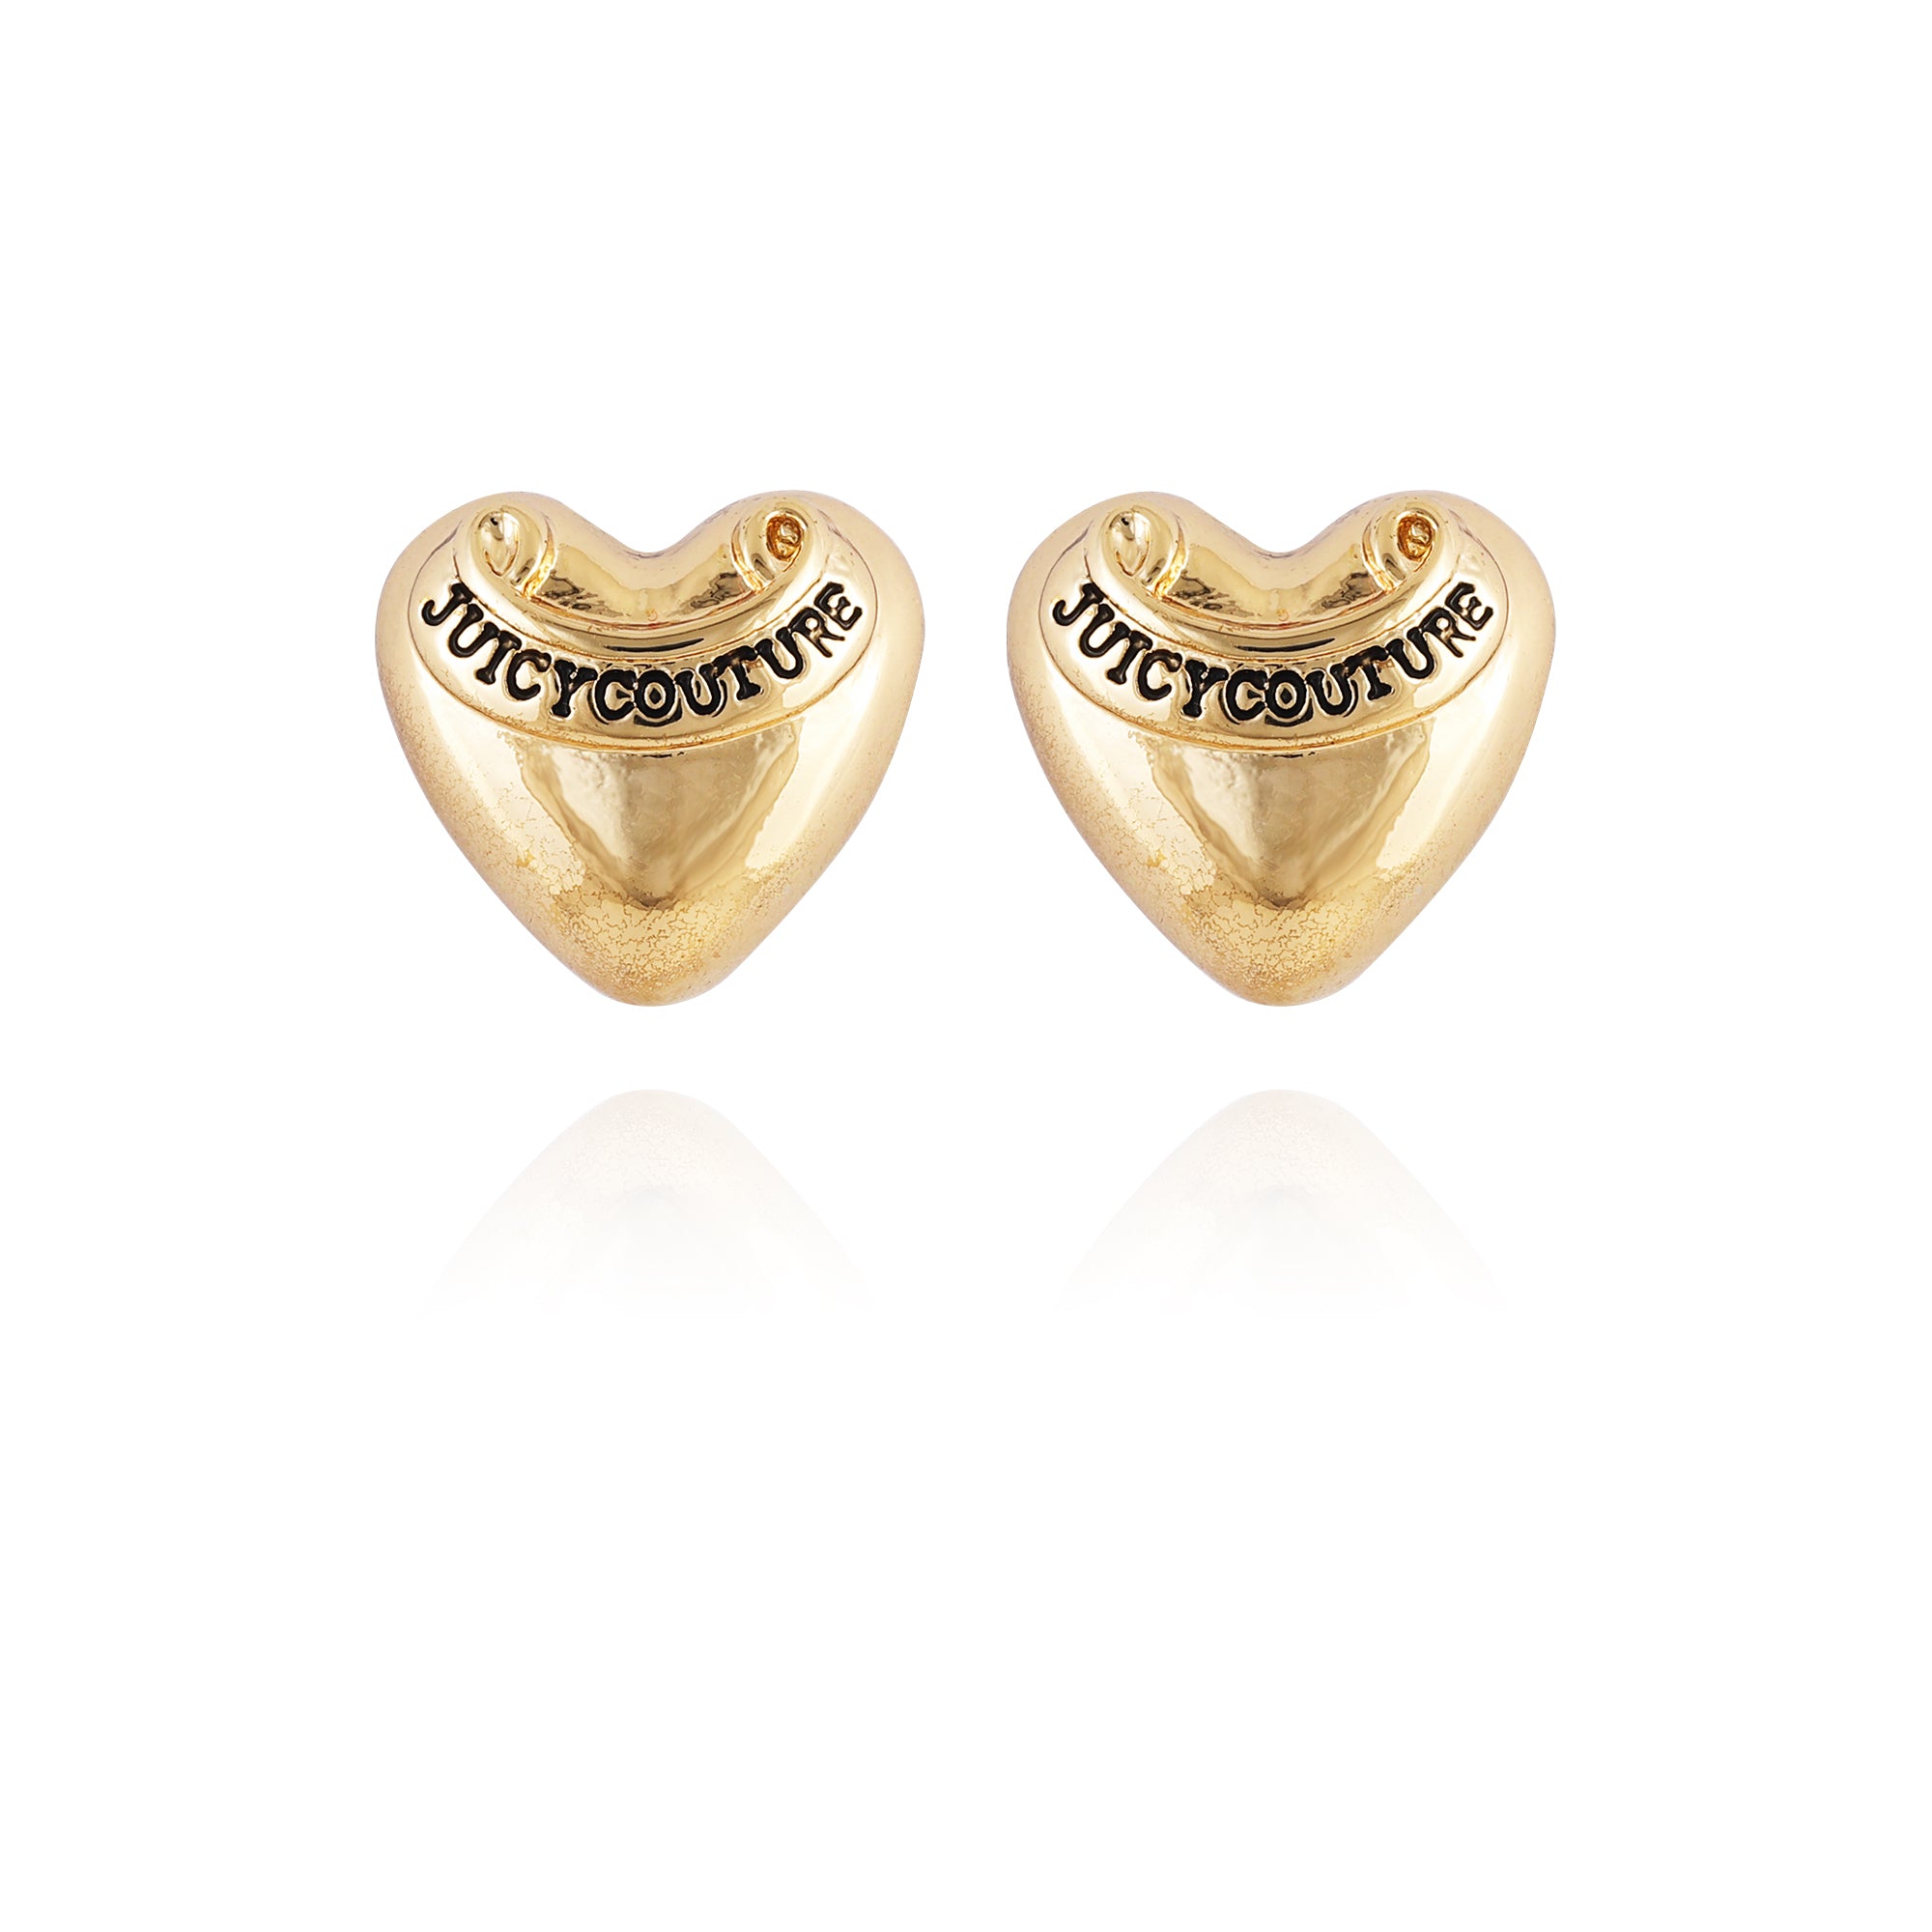 Designer Juicy Couture Gold-Tone Rhinestone Toggle Heart Charm Bracelet